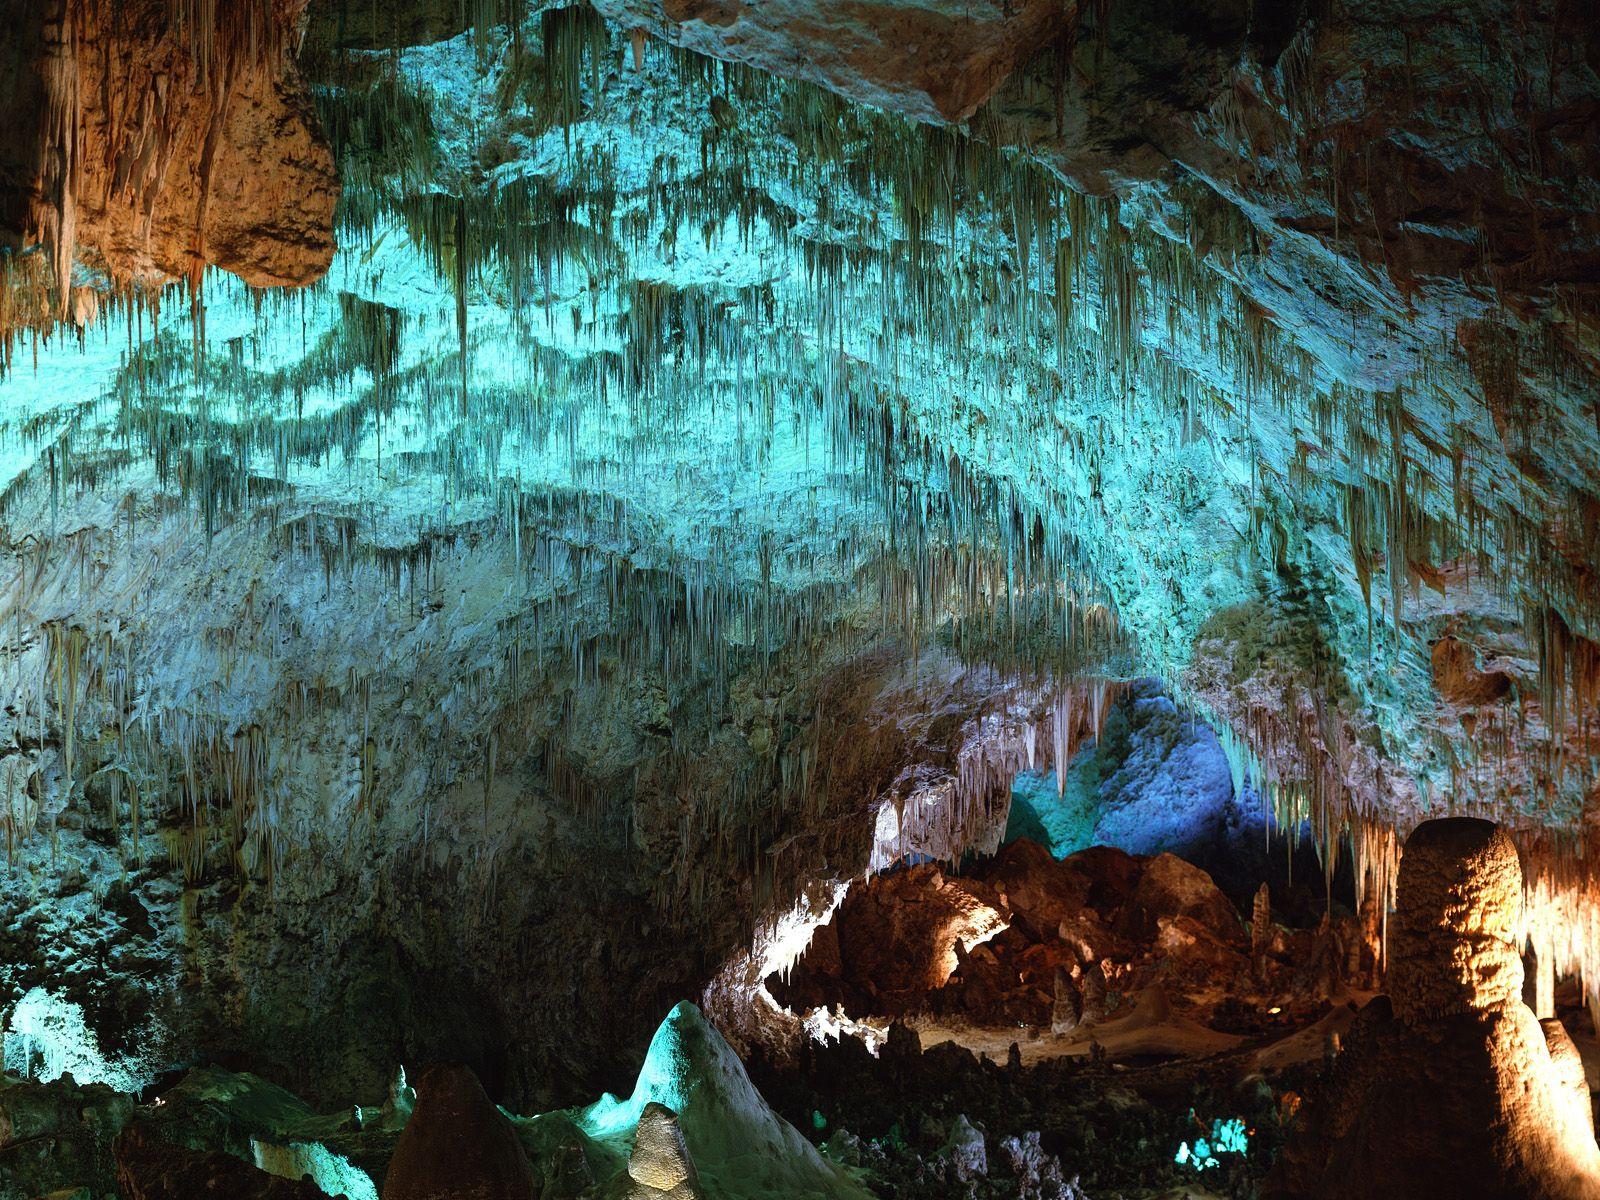 Cave Stalactites, Carlsbad Caverns National Park, New Mexico. My